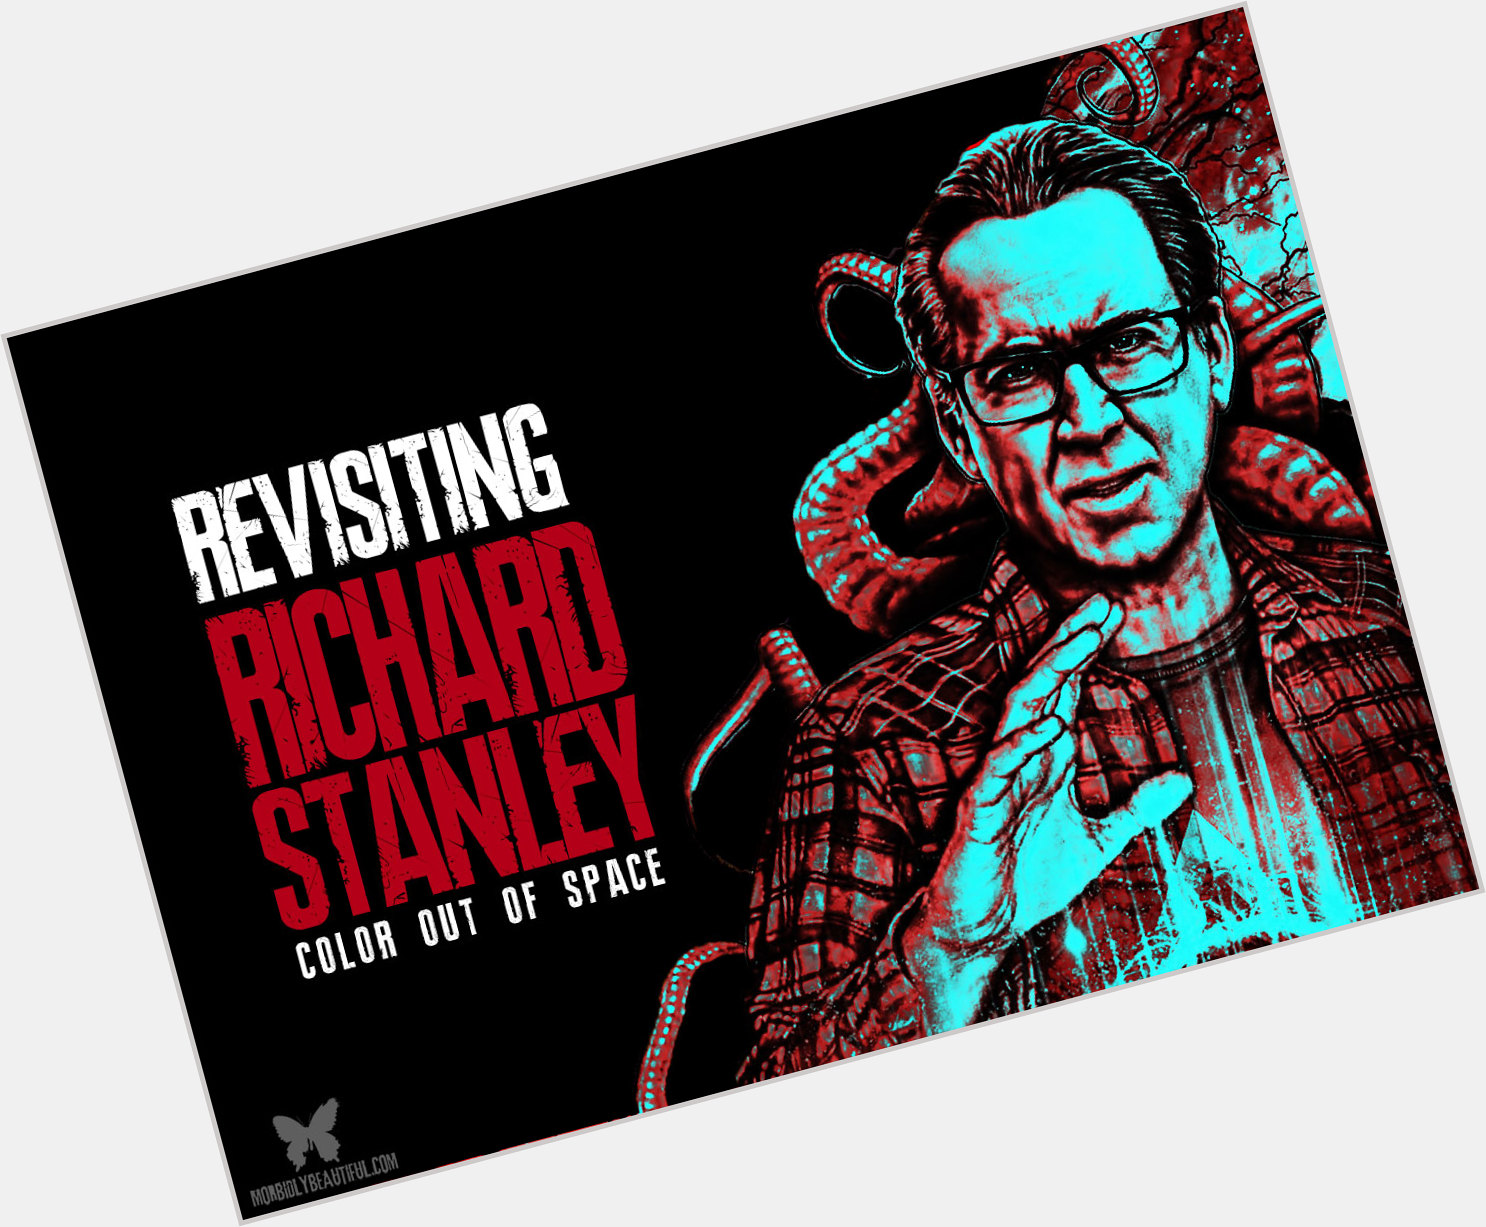 Richard Stanley hairstyle 8.jpg